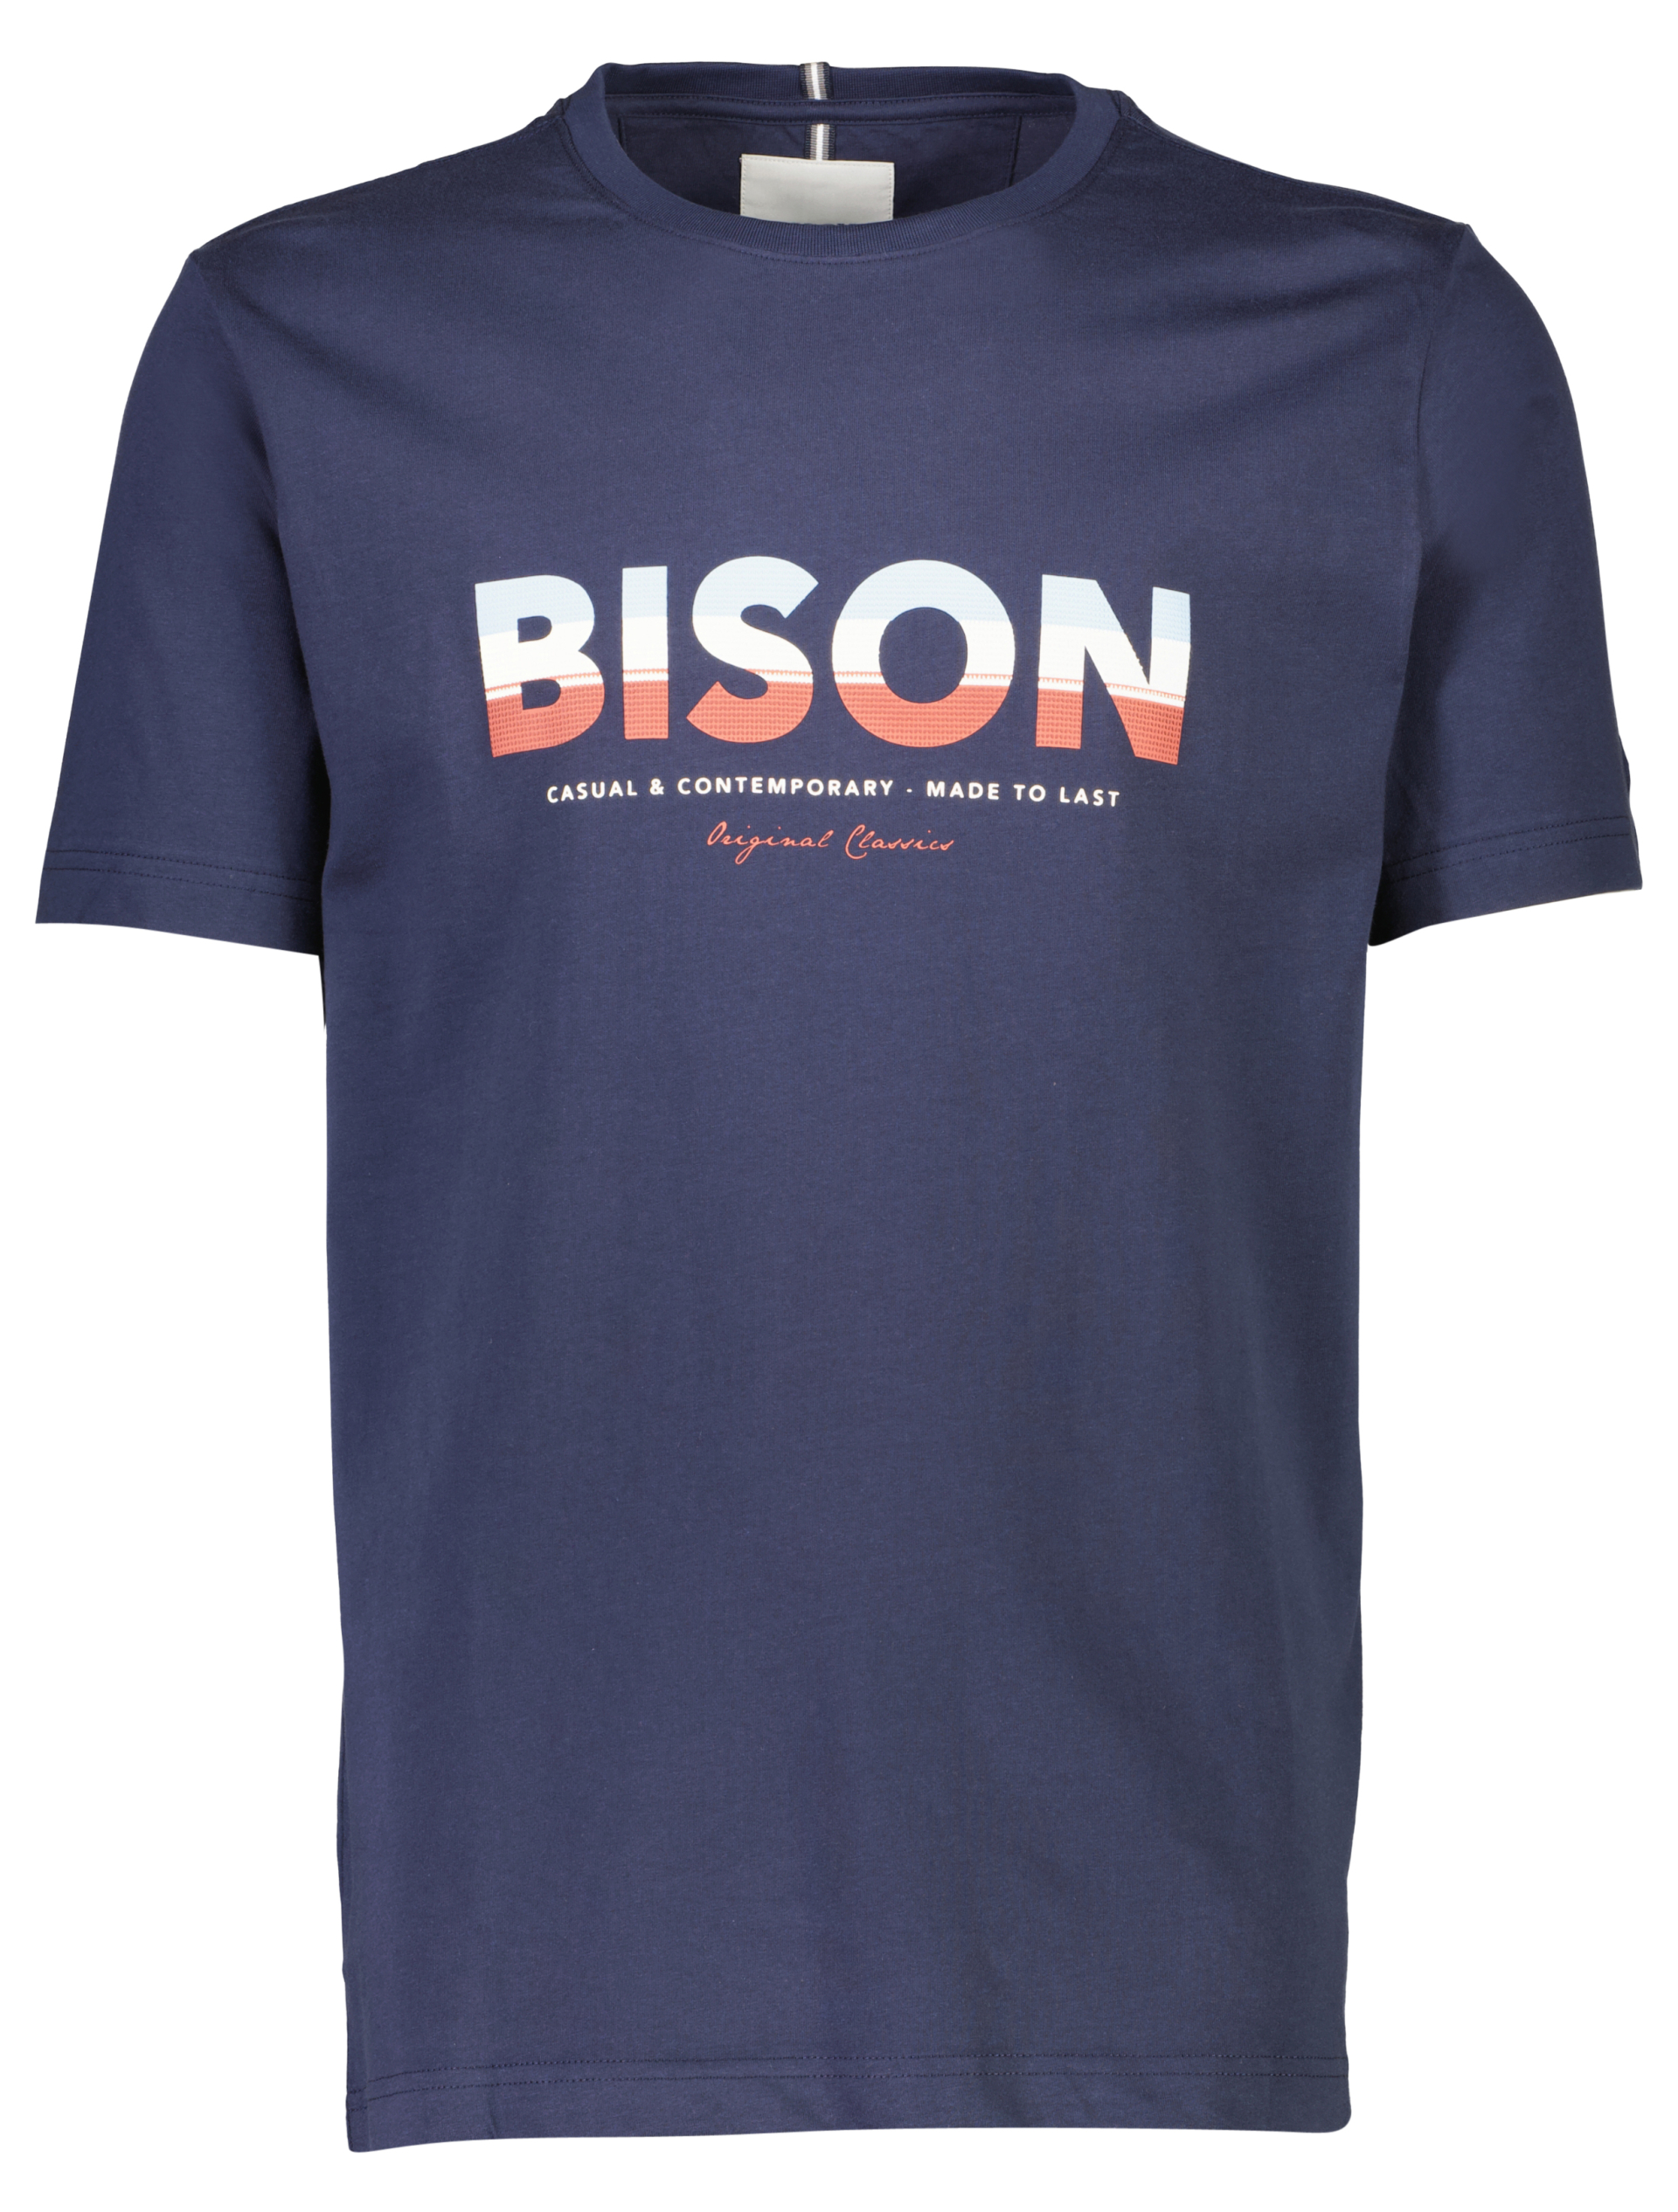 Bison T-shirt blå / navy